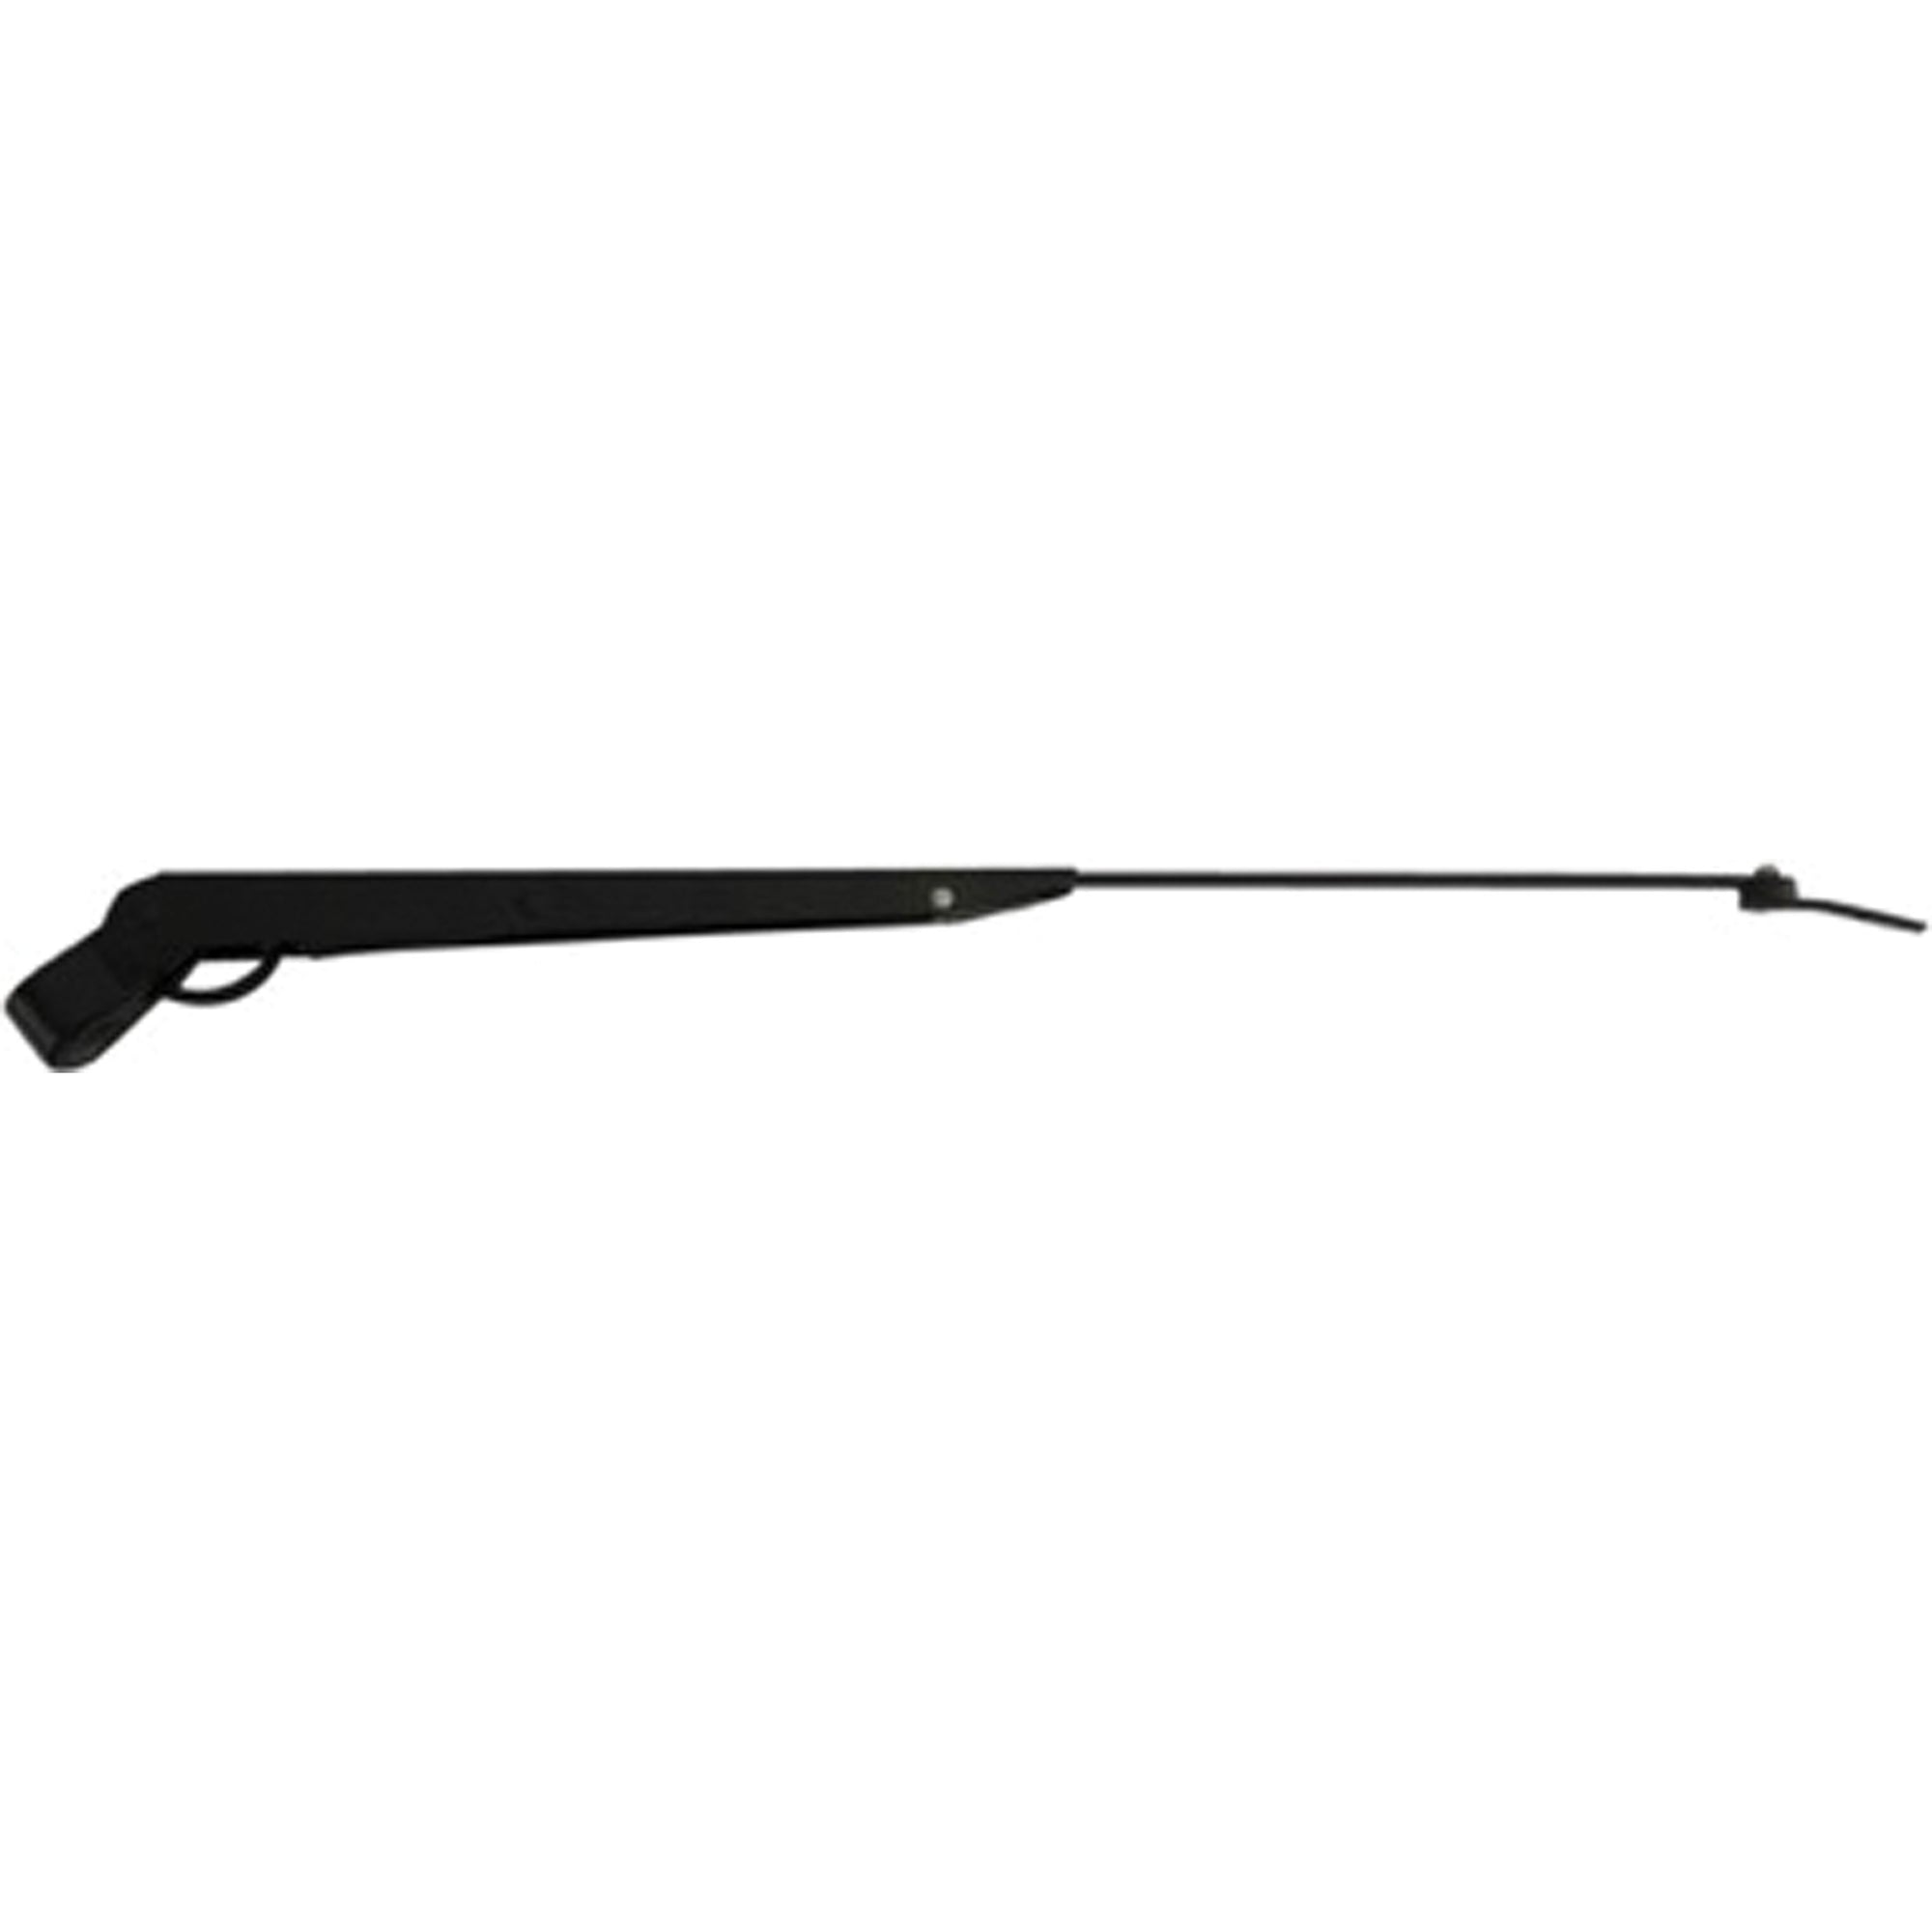 Sea-Dog 413111B-1 Adjustable Stainless Steel Wiper Arm - 6.75" to 10.5", Black